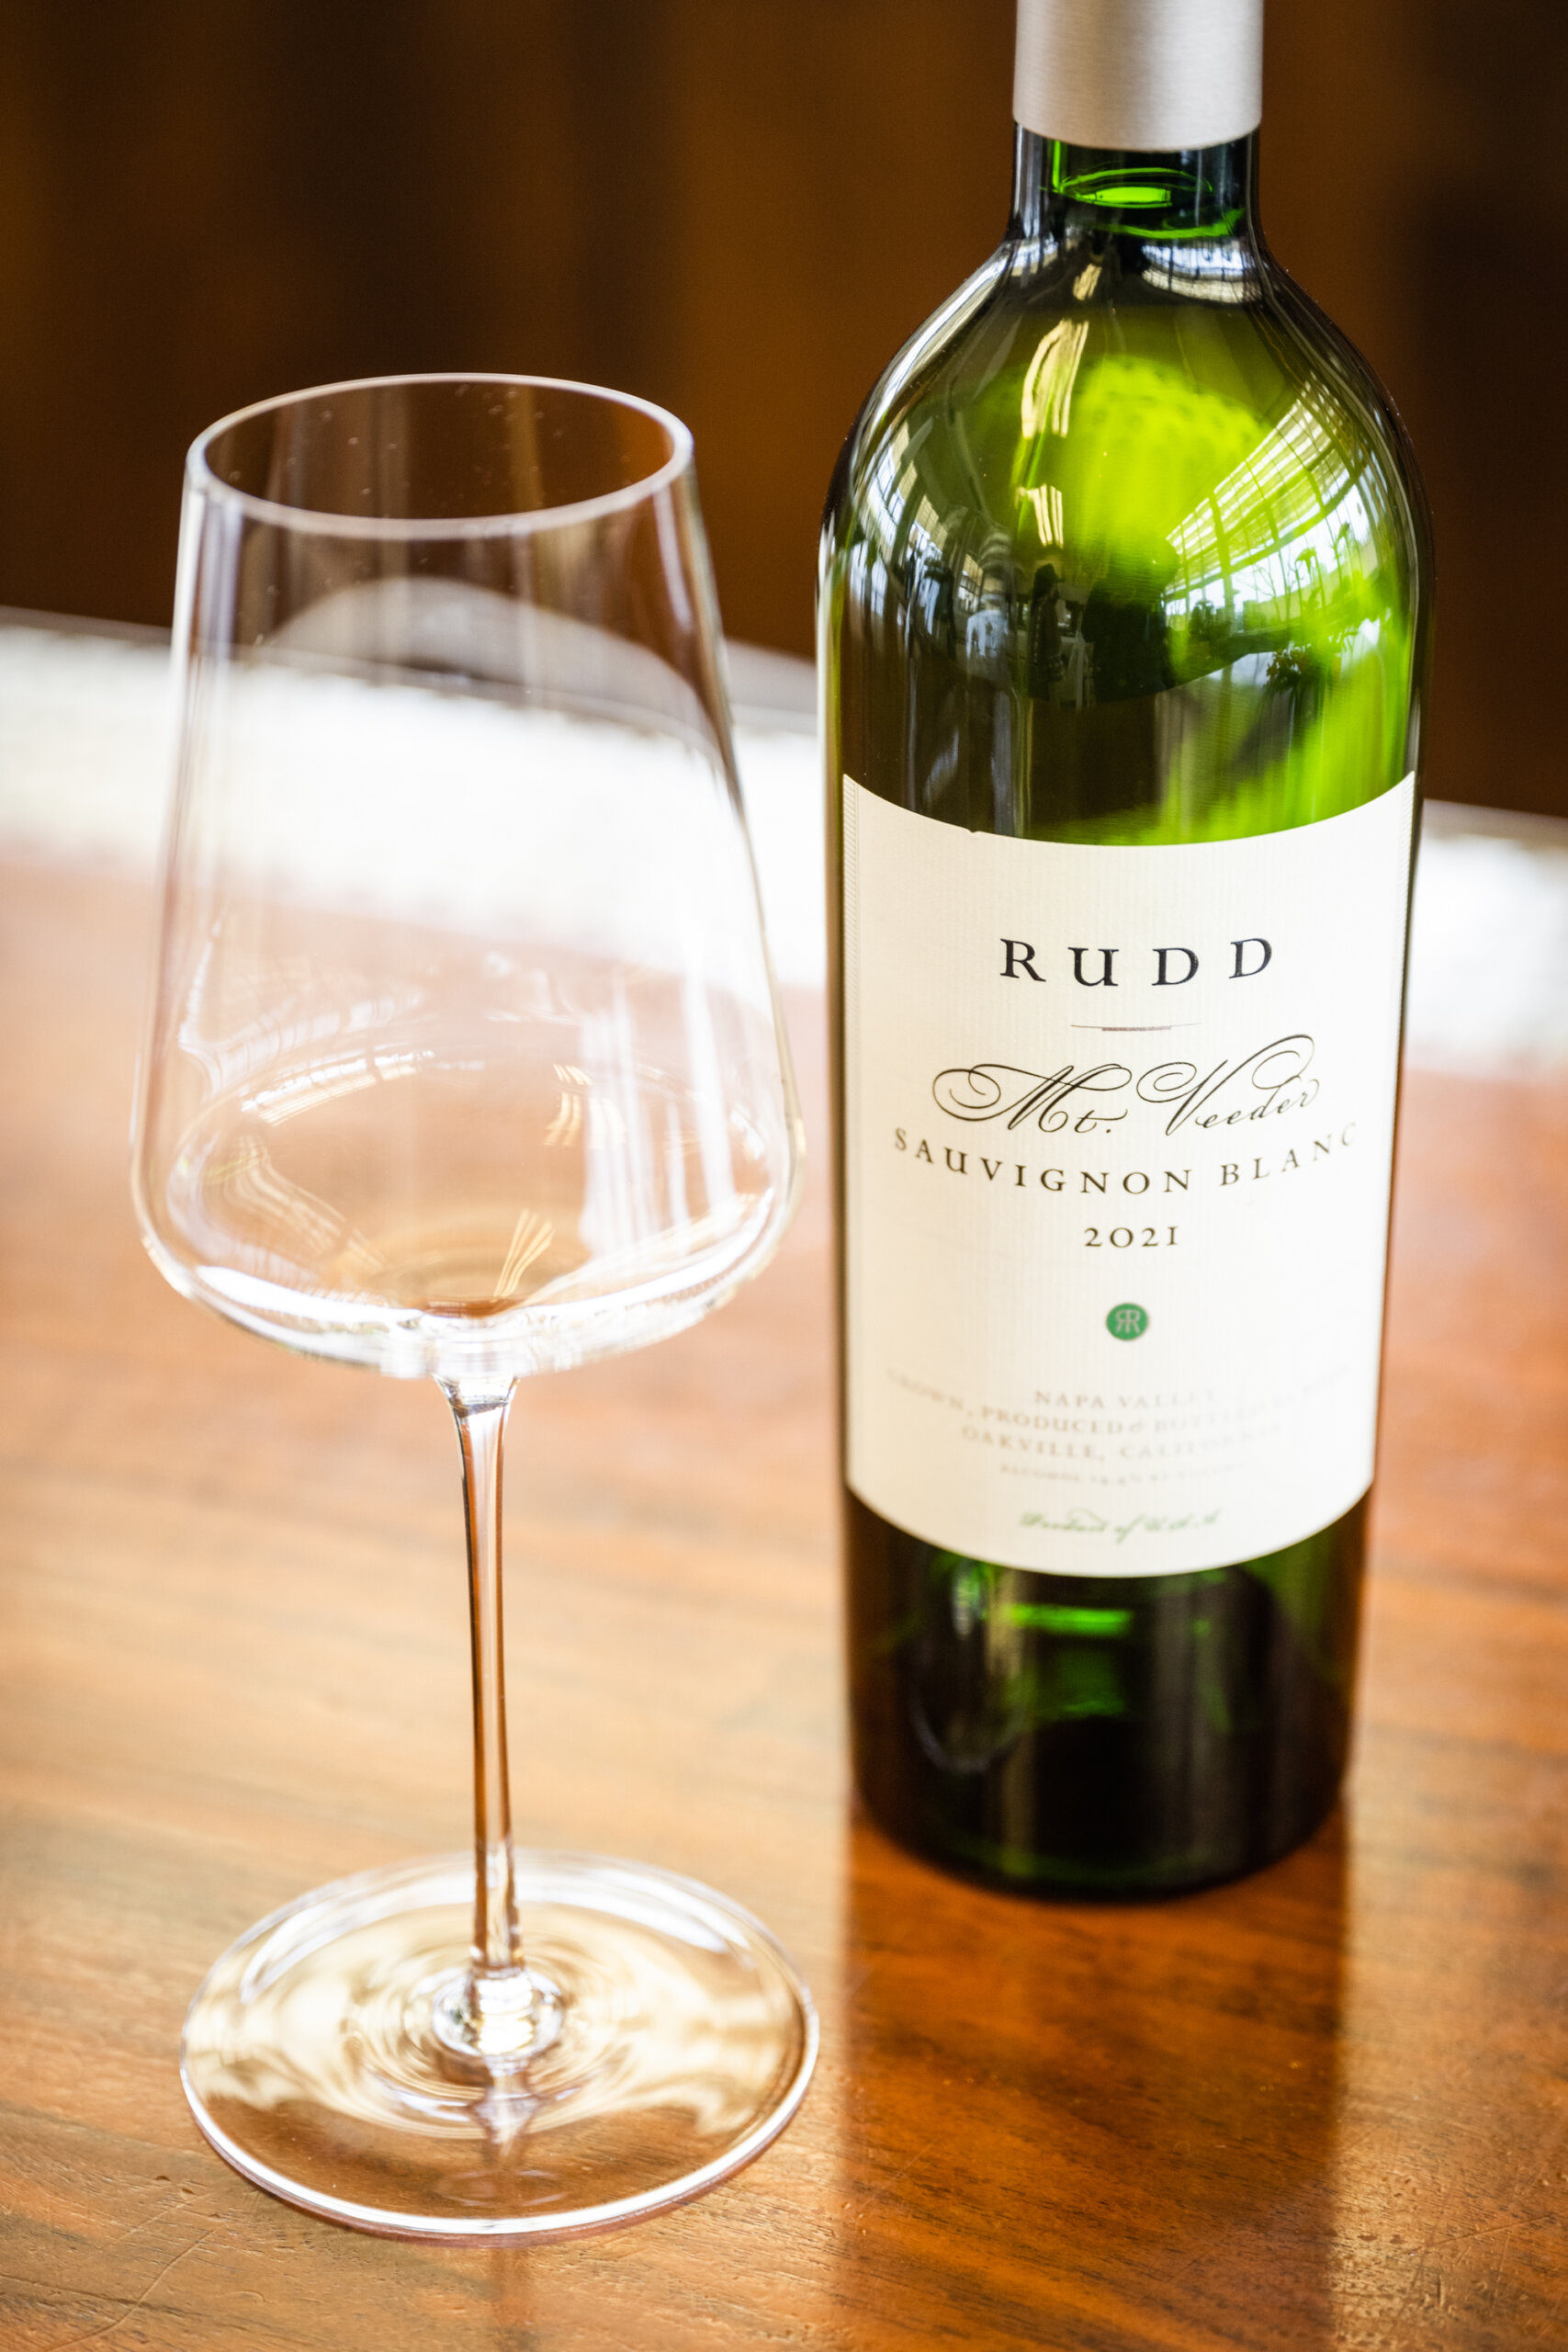 A bottle of Rudd Sauvignon Blanc